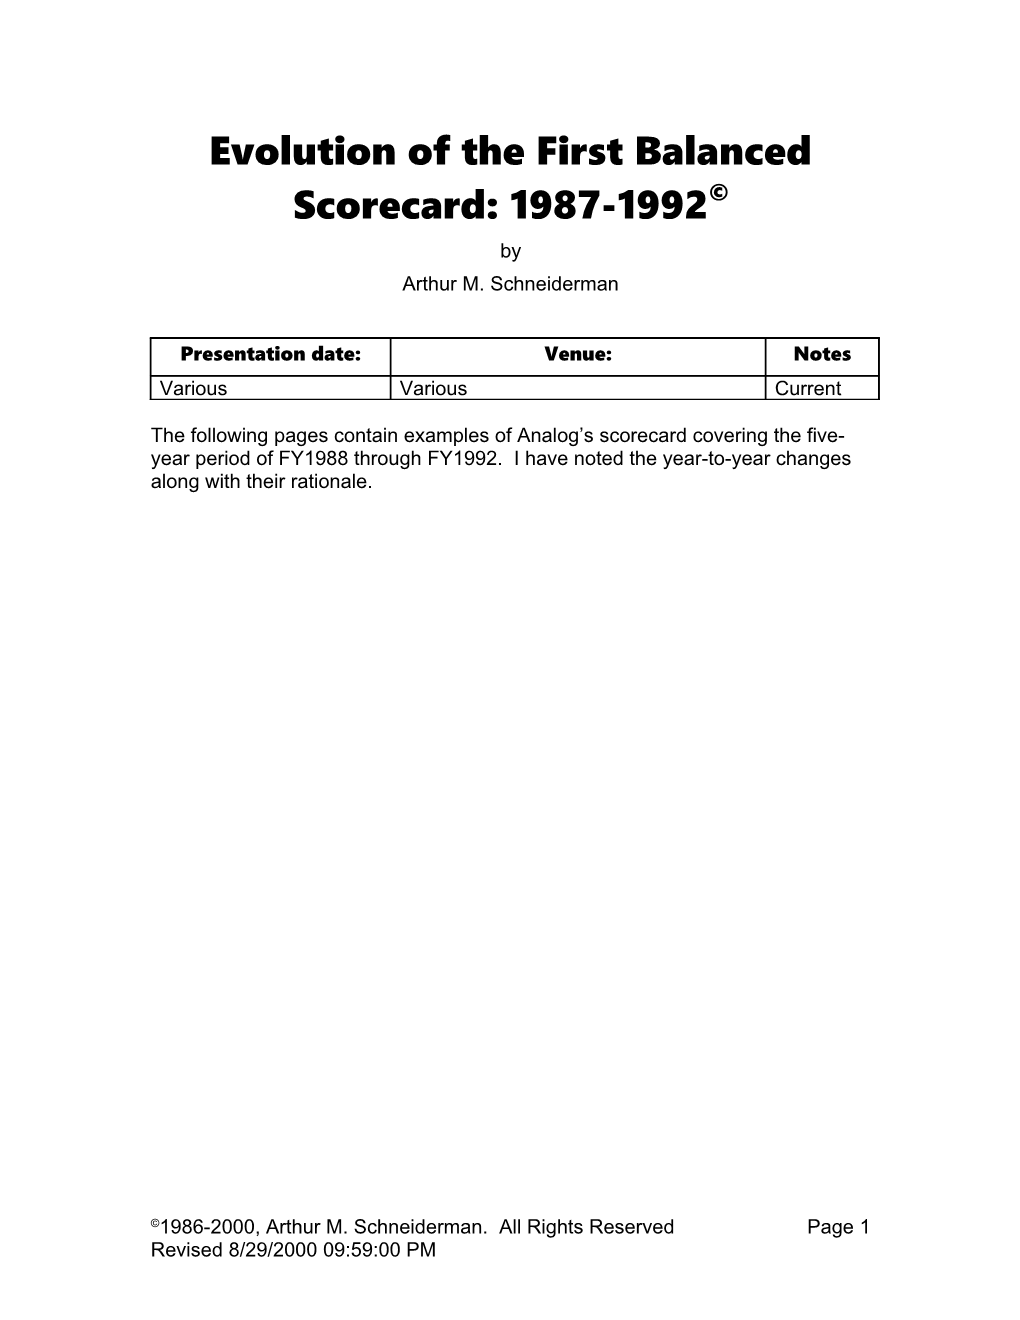 Evolution of the First Balanced Scorecard: 1987-1992